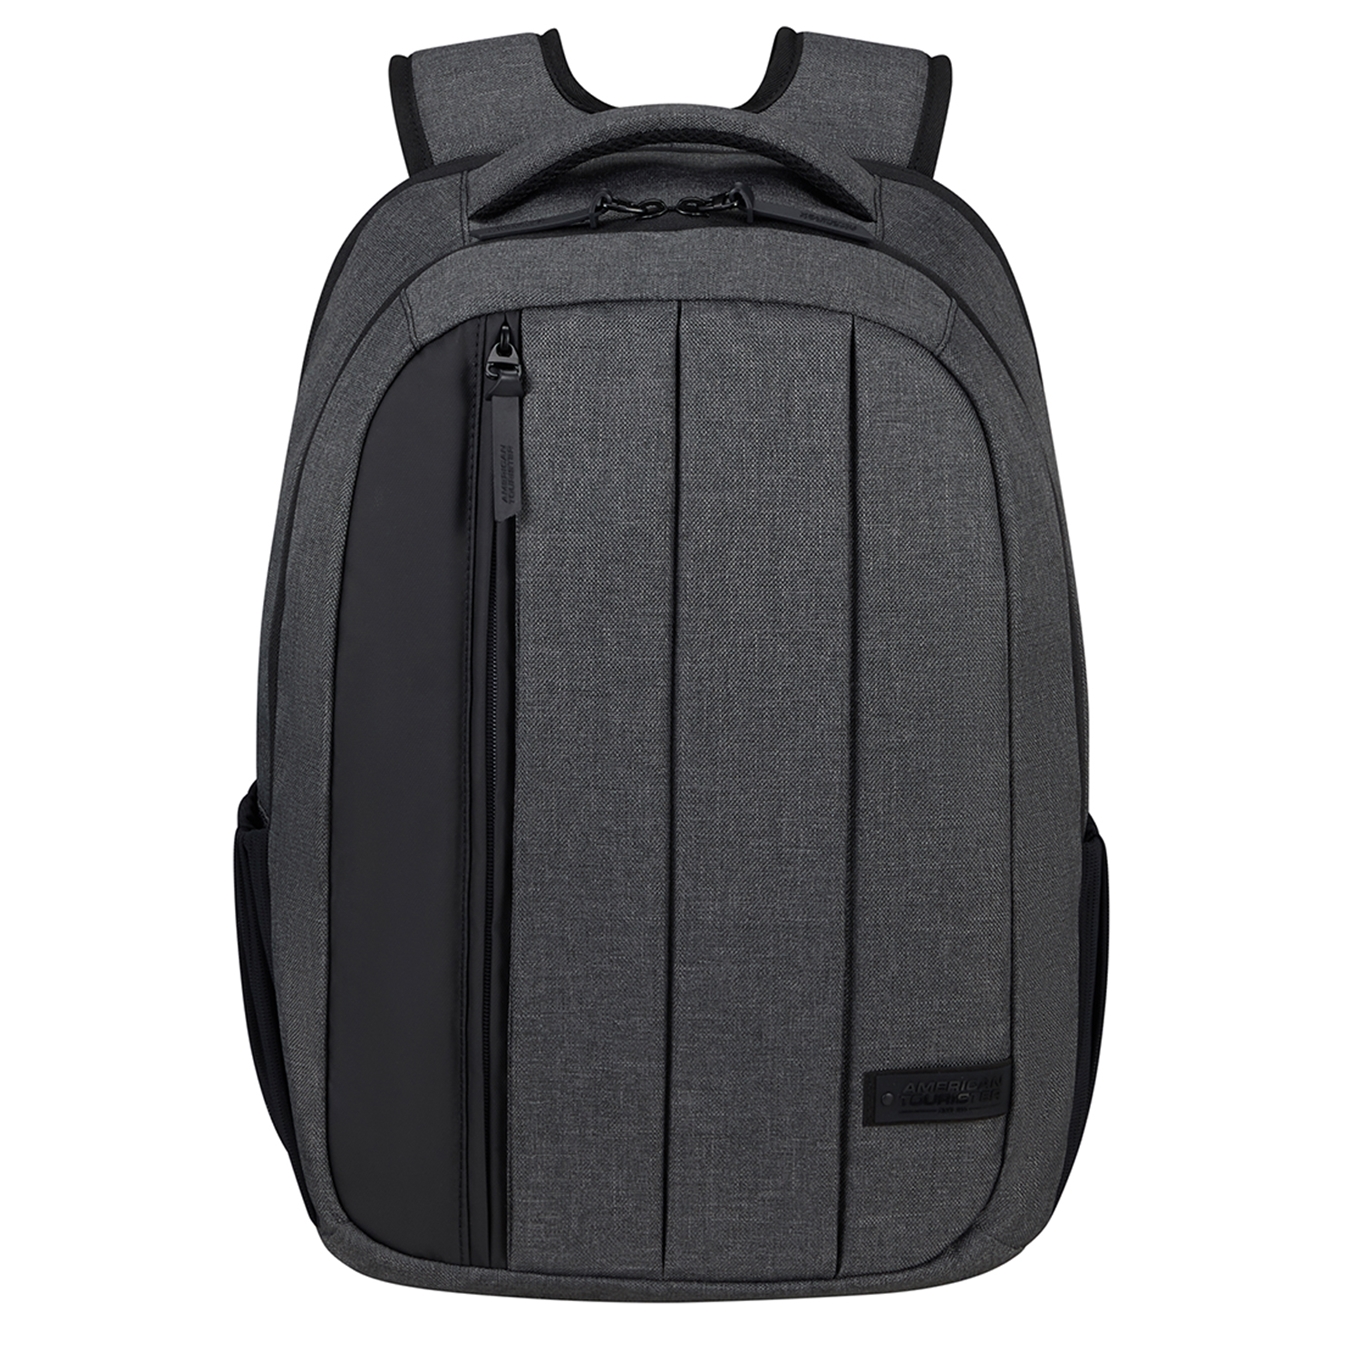 American Tourister Streethero Laptop Backpack 15.6" grey melange backpack